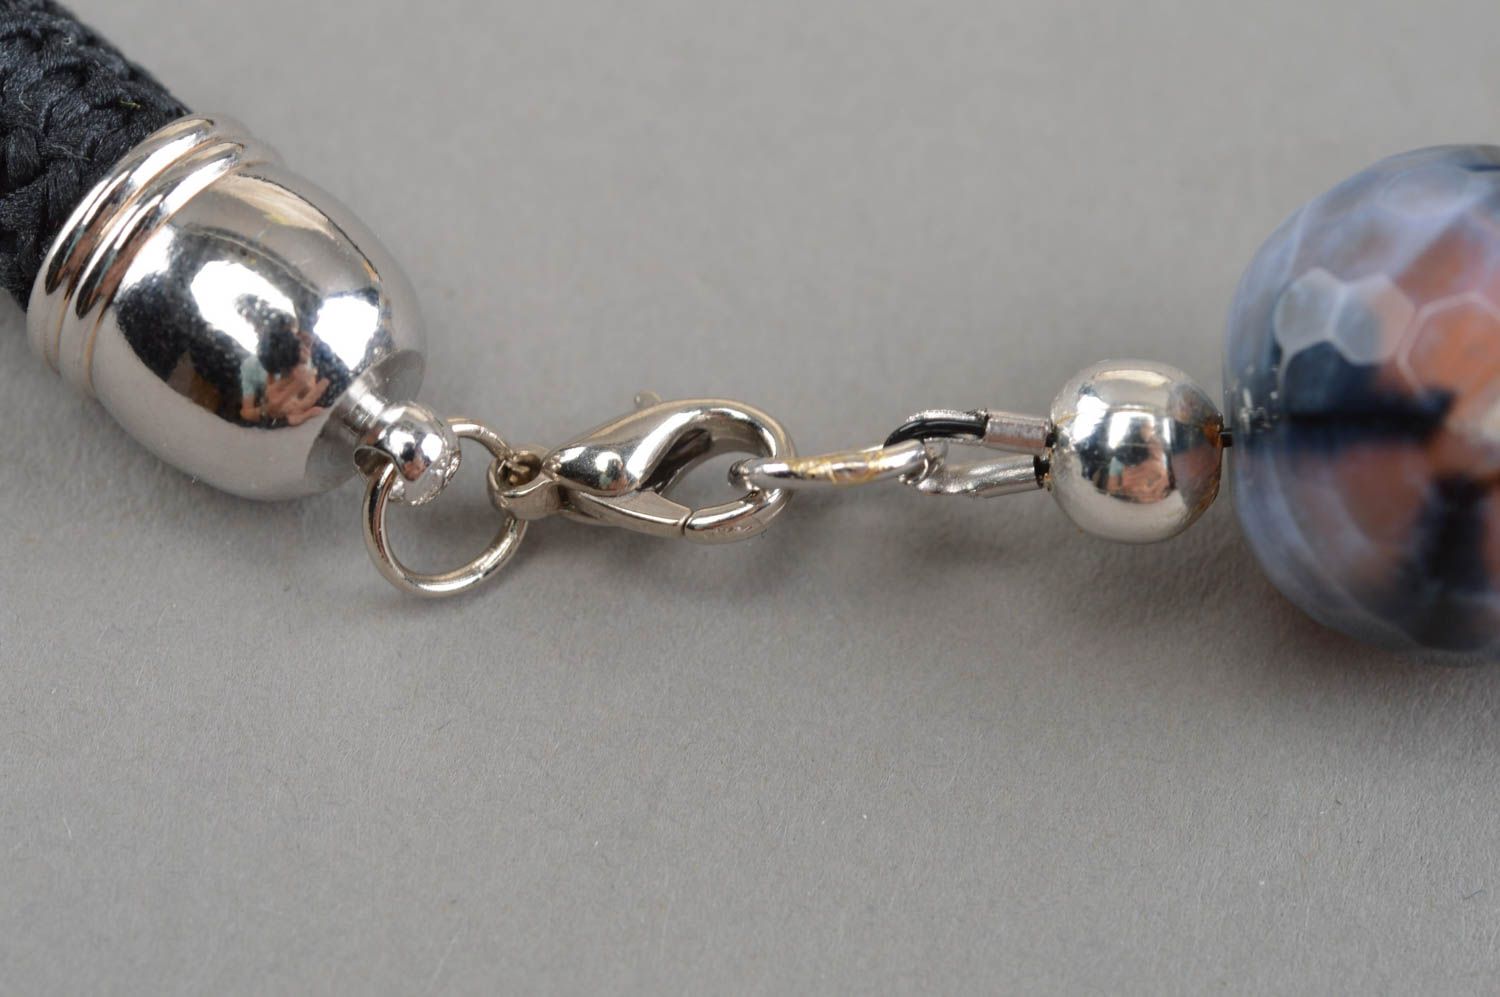 Handmade gemstone necklace designer accessories fashionable jewelry gift idea photo 5